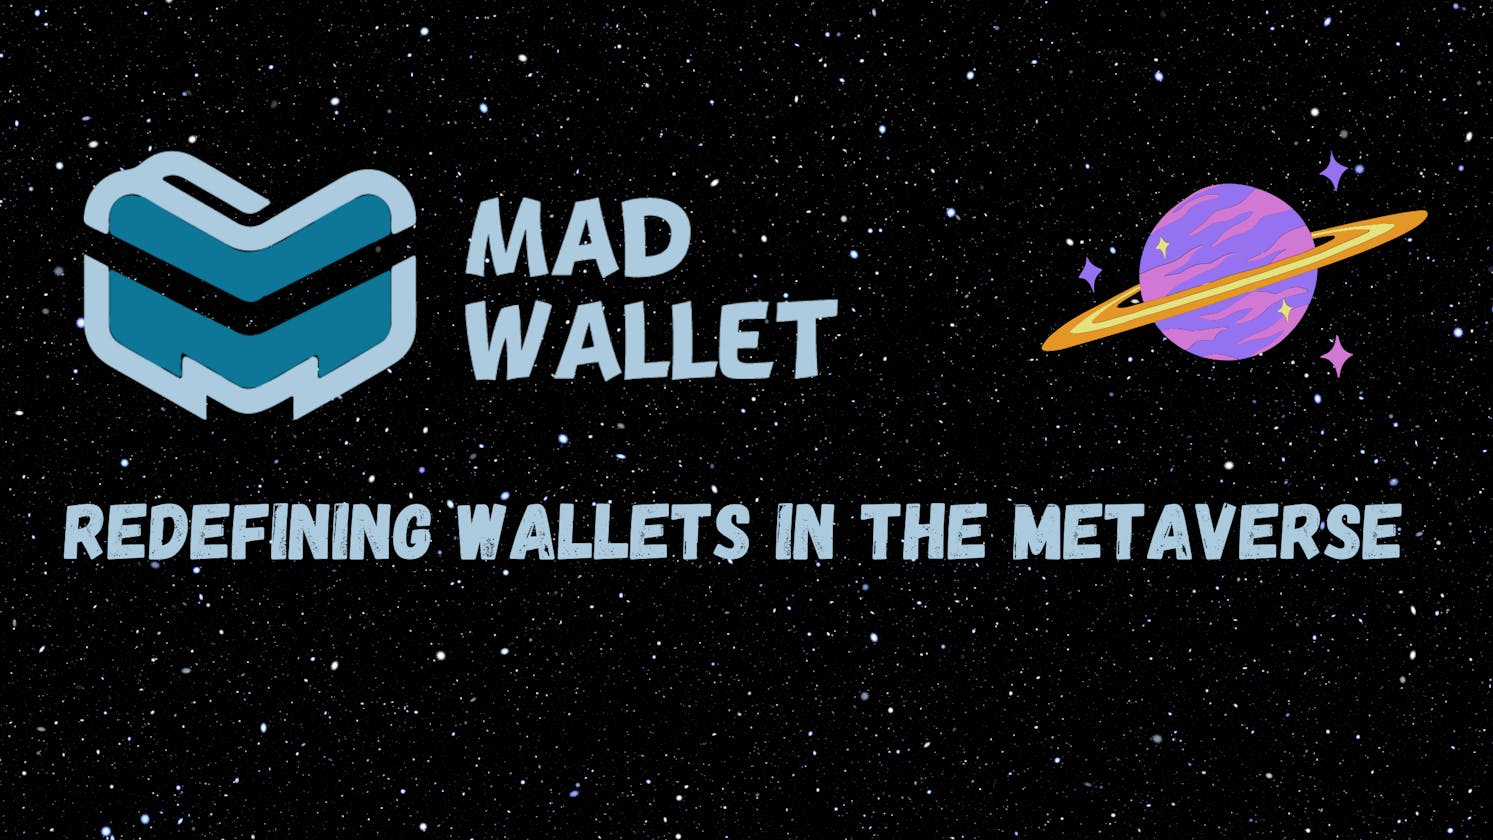 EXPLORING MADWALLET: Redefining Wallets in the Metaverse